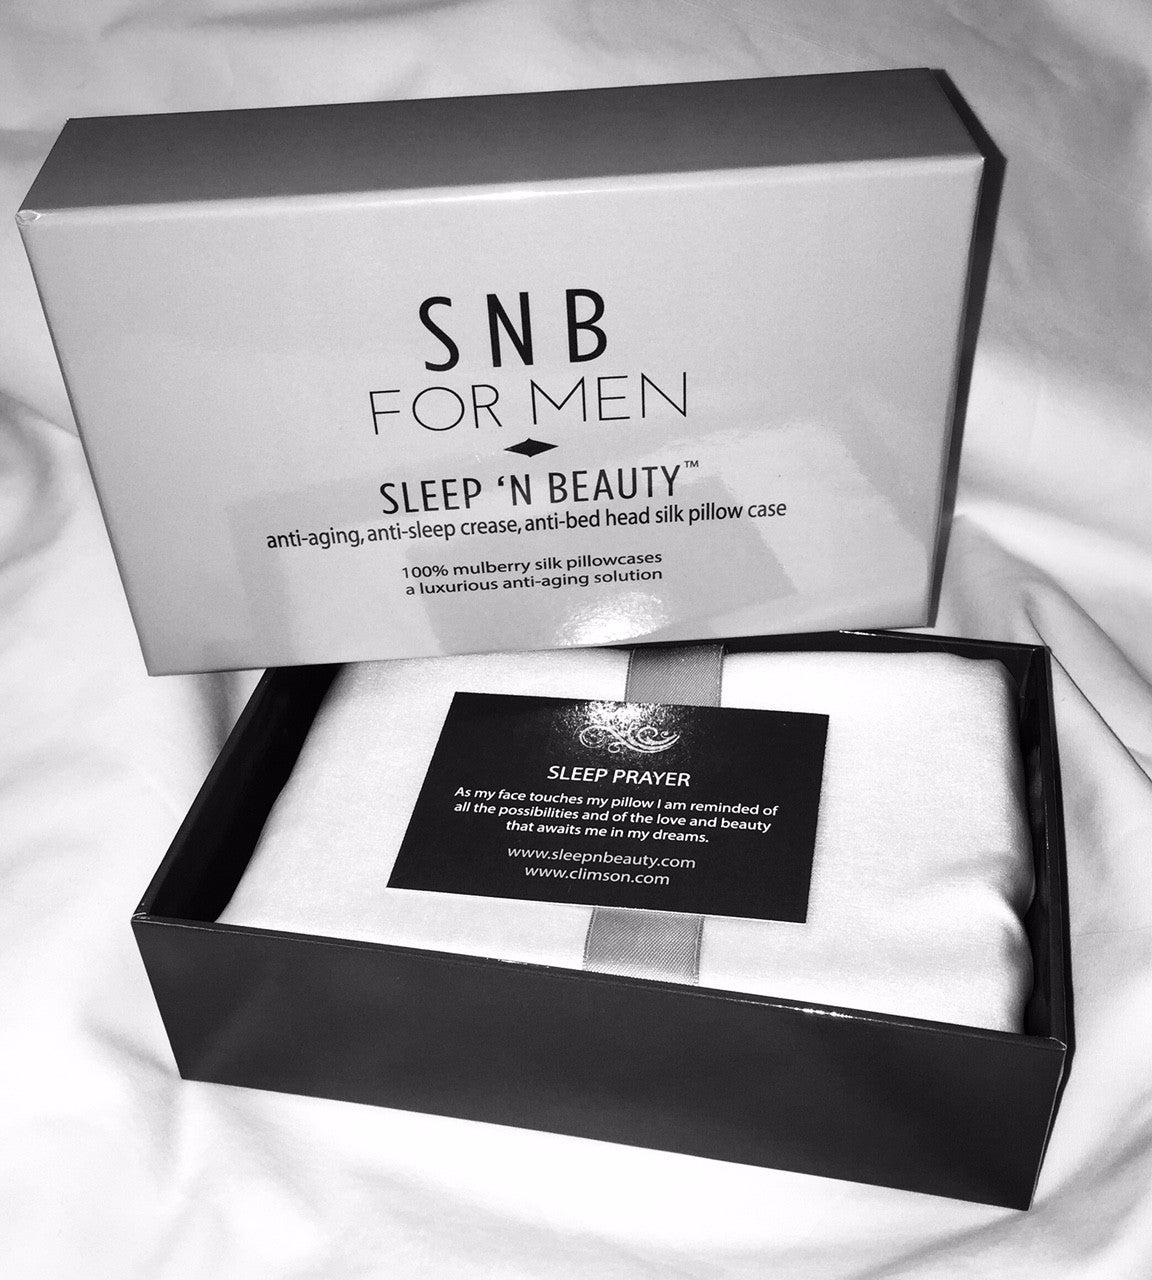 Sleep 'n Beauty for men- 100% Silk Pillowcase (King Size) in a beautiful Gift Box